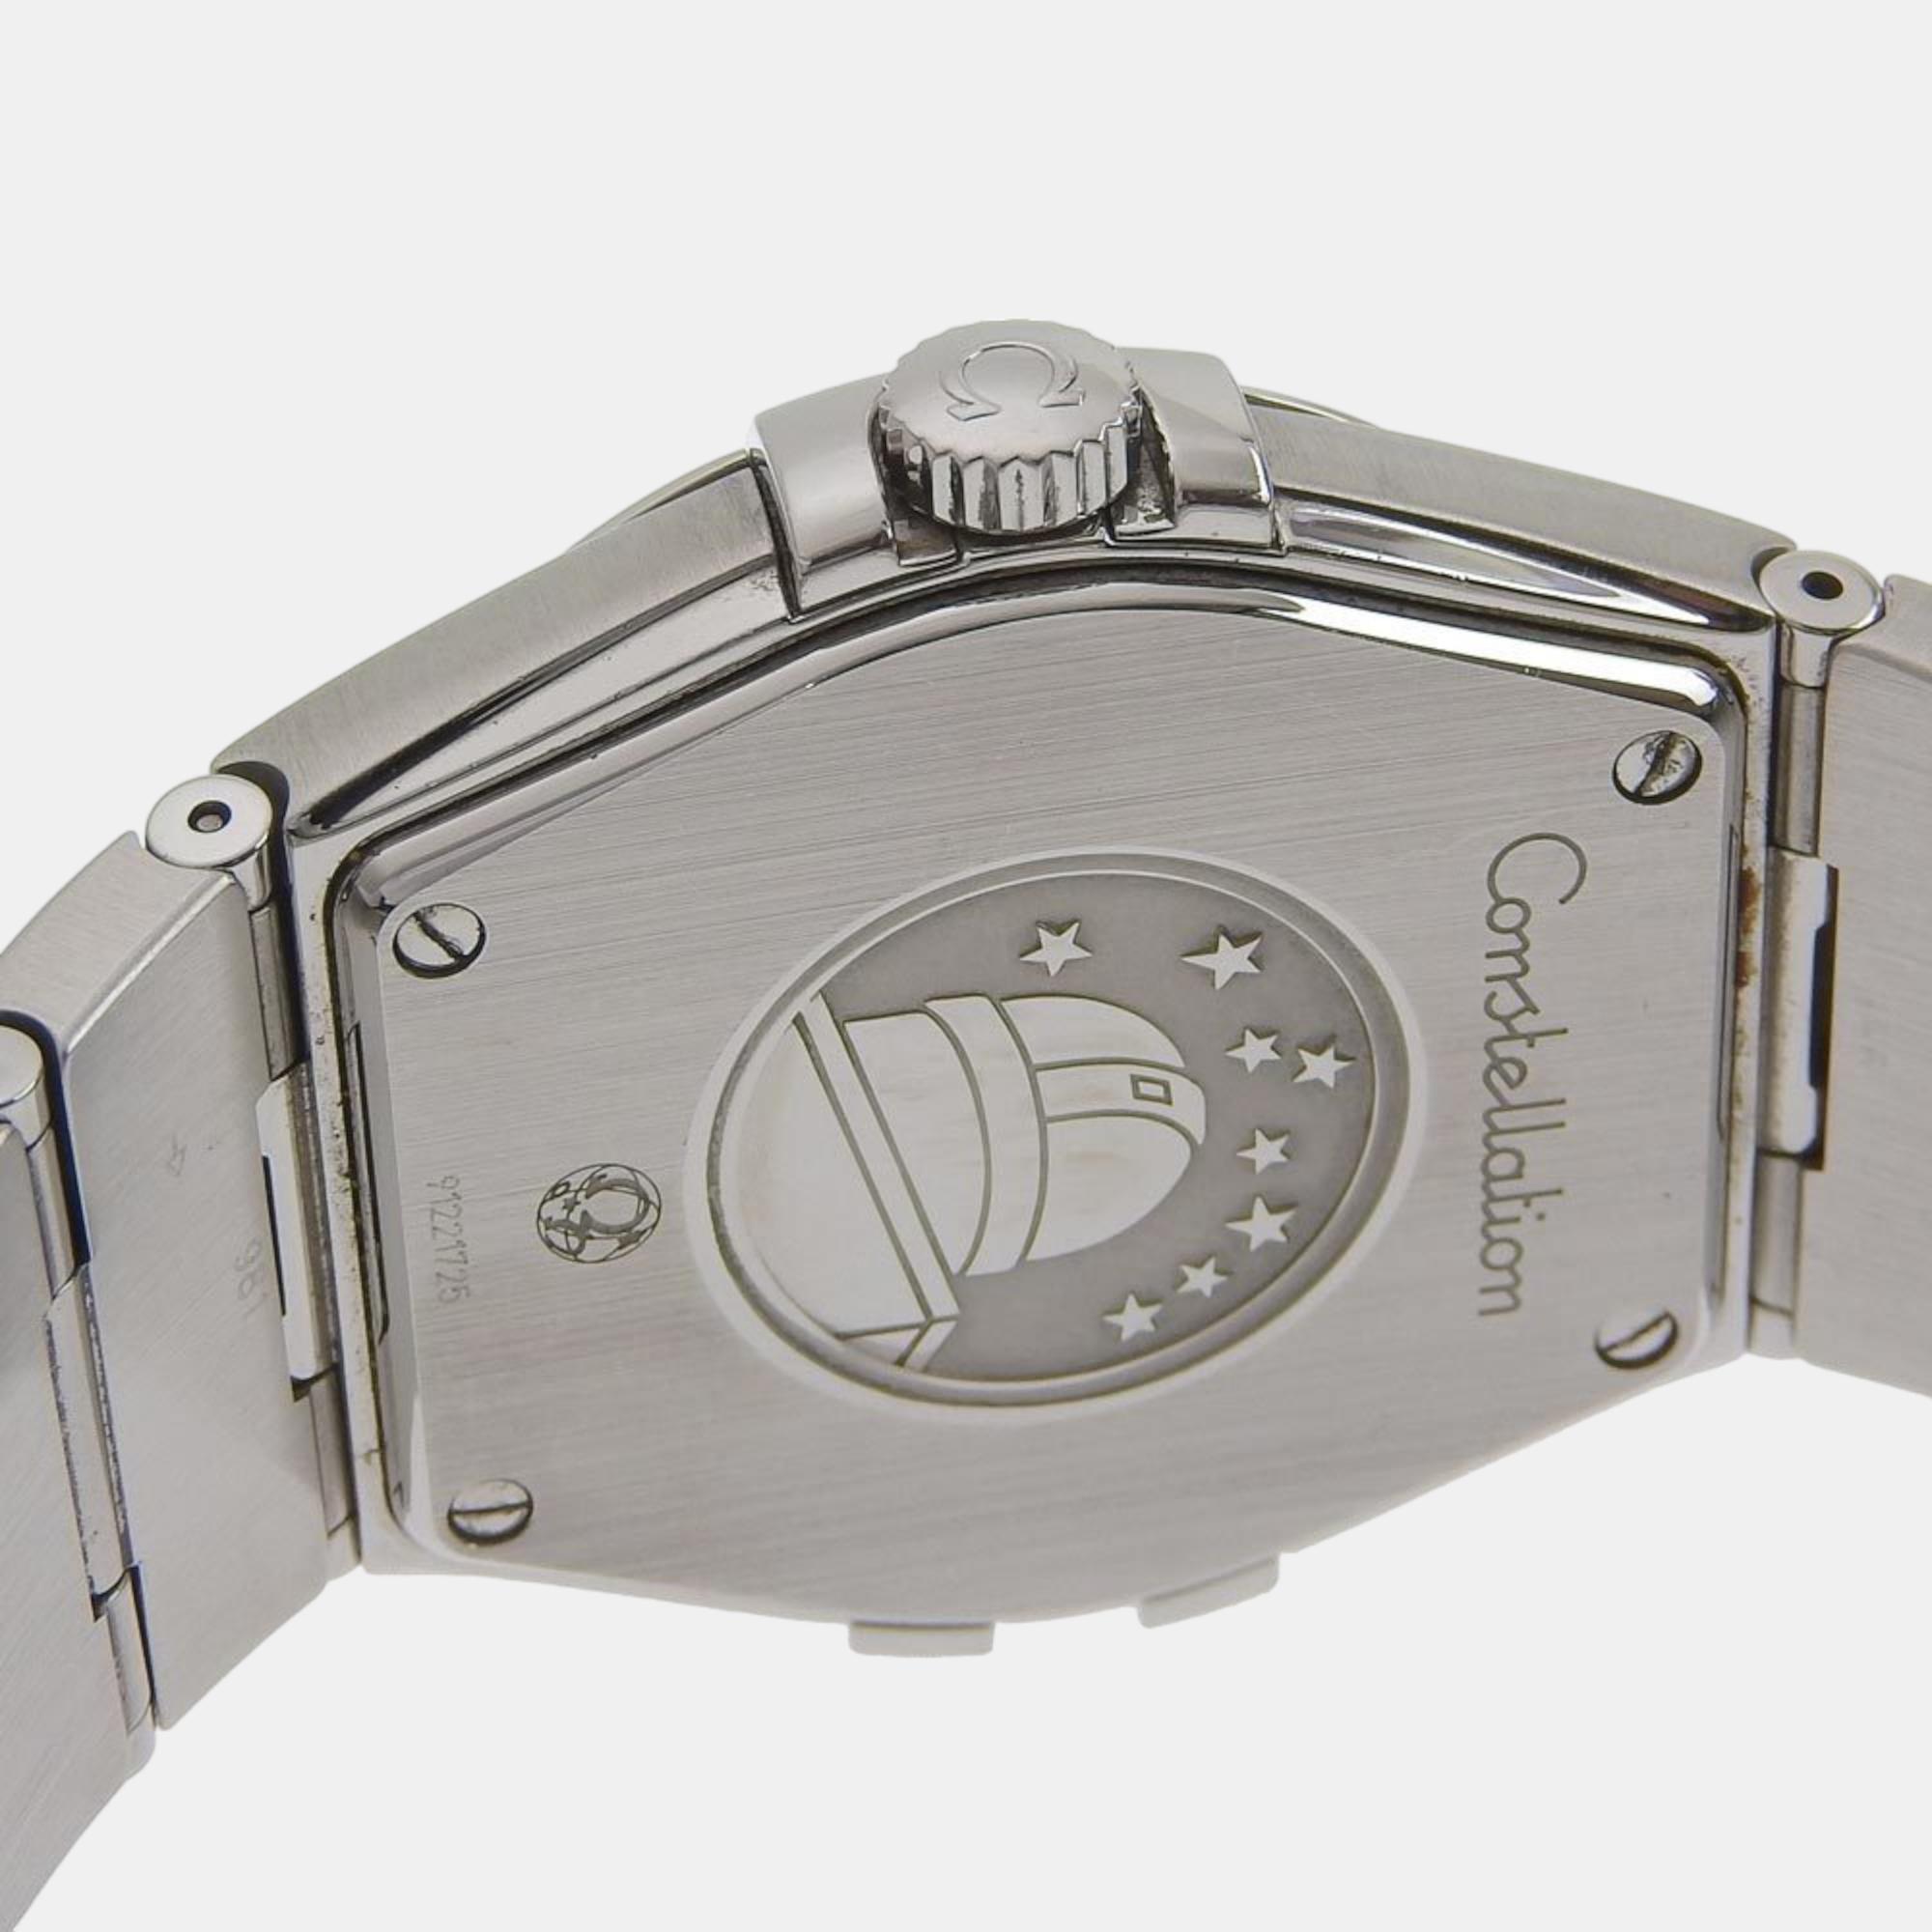 Omega Black Stainless Steel Constellation 123.10.35.60.01.001 Quartz Men's Wristwatch 37 Mm